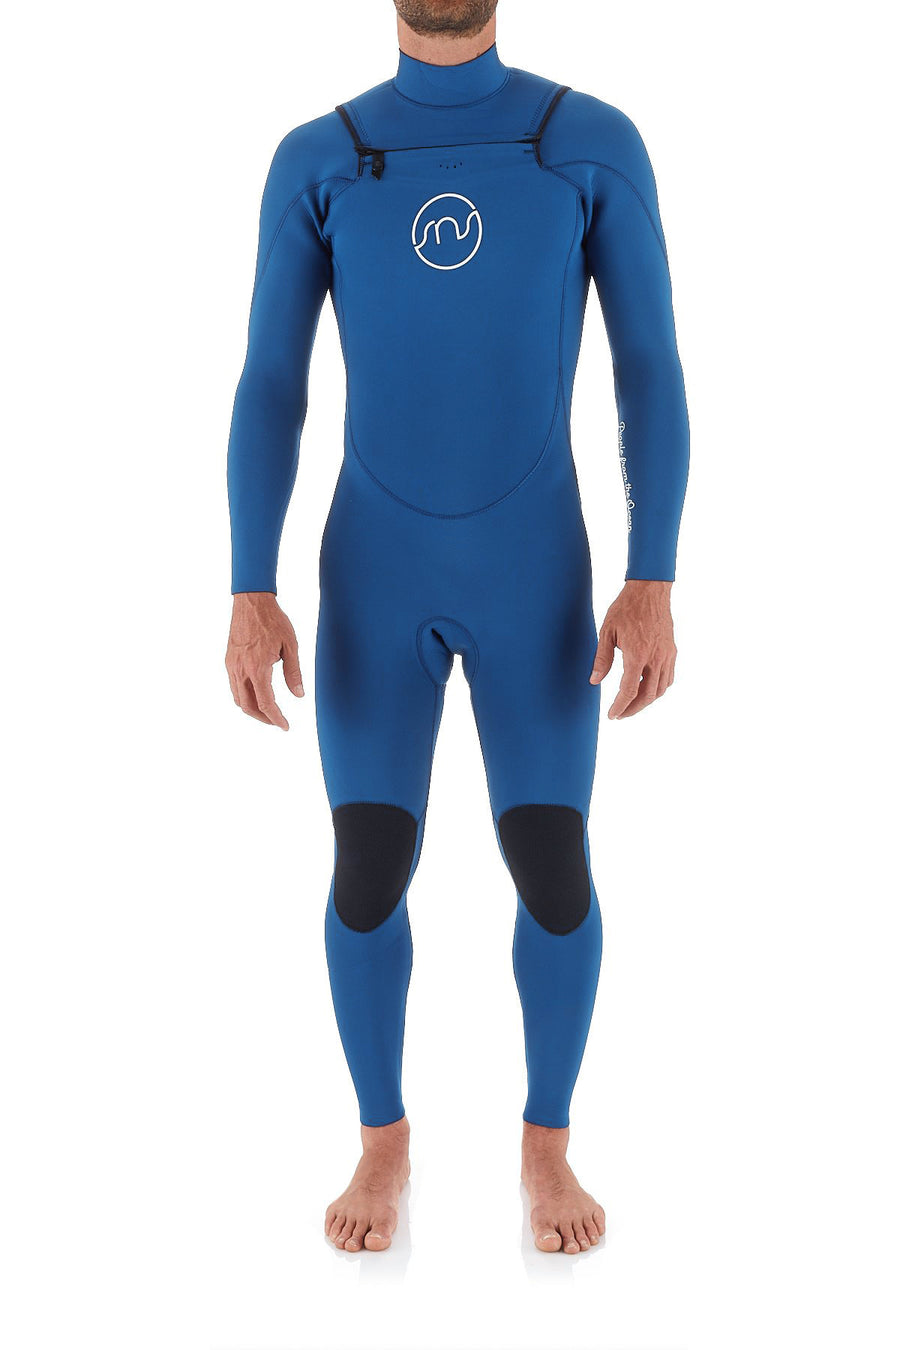 Yulex™ Wetsuit | 2mm | Integral | Caribbean Blue